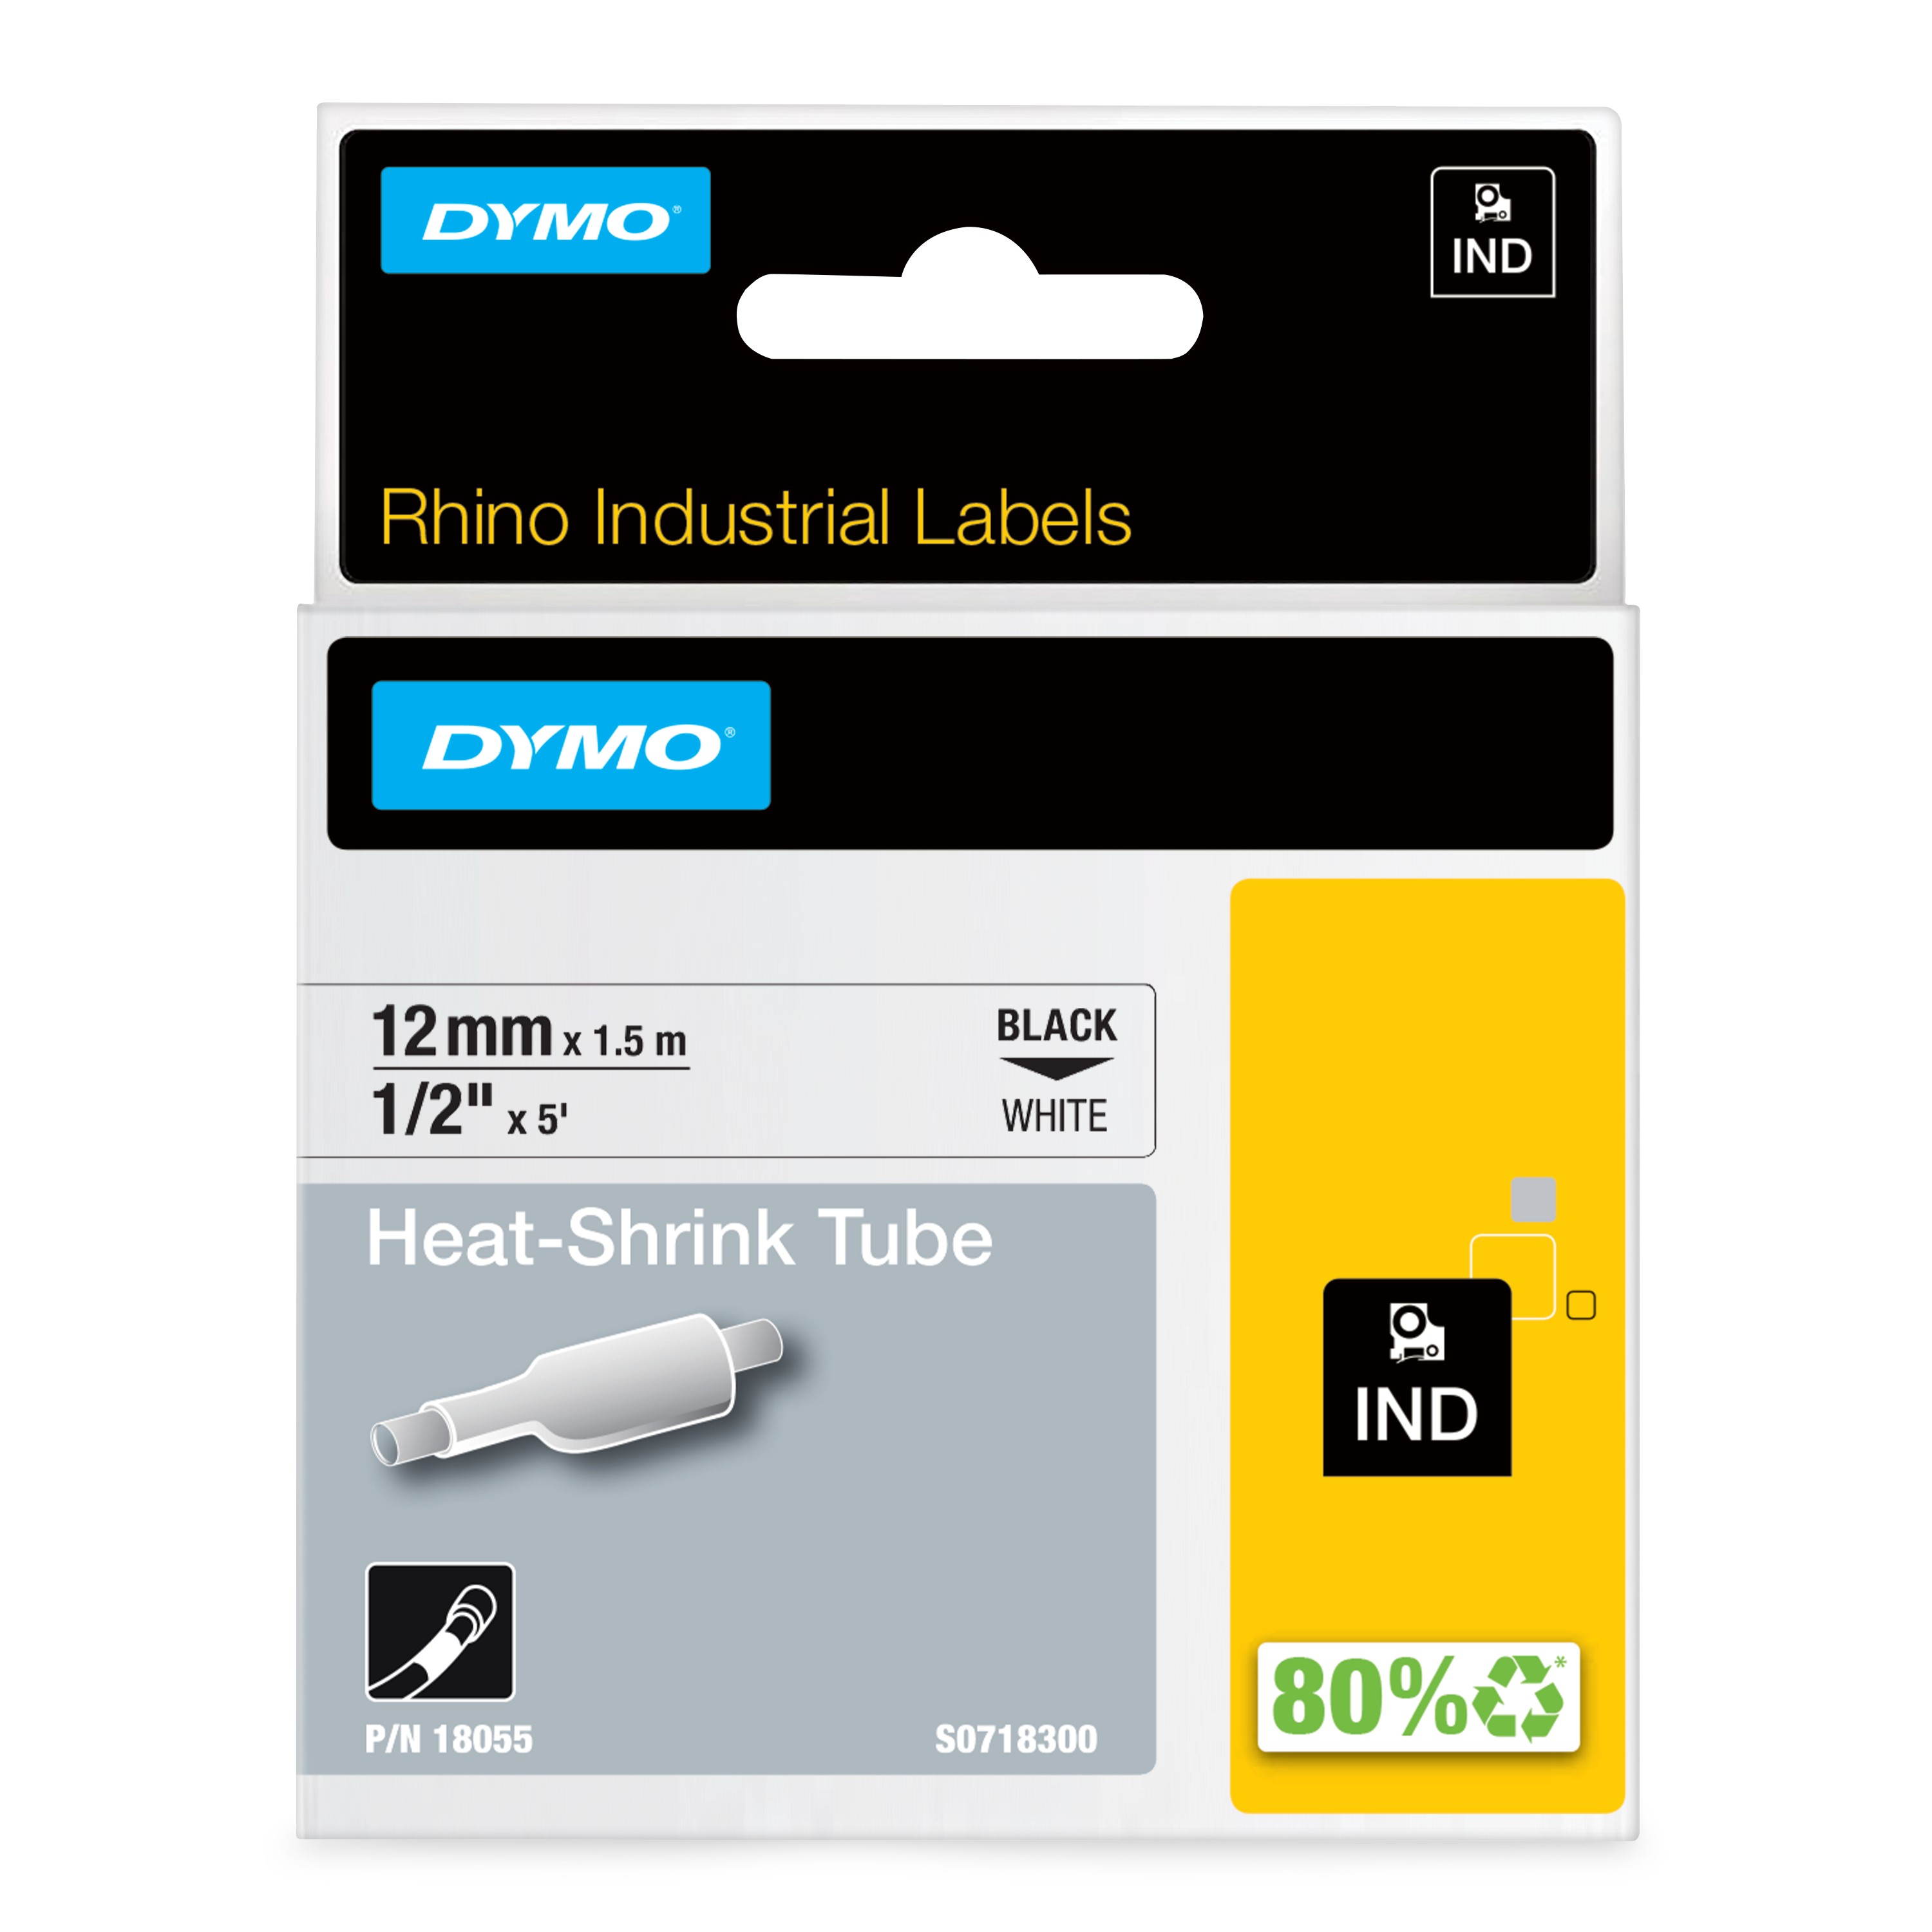 Dymo Heat Shrink Tubing, White 12mm Sleeve Dia. x 1.5m Length 3:1 Ratio, DYMO Series